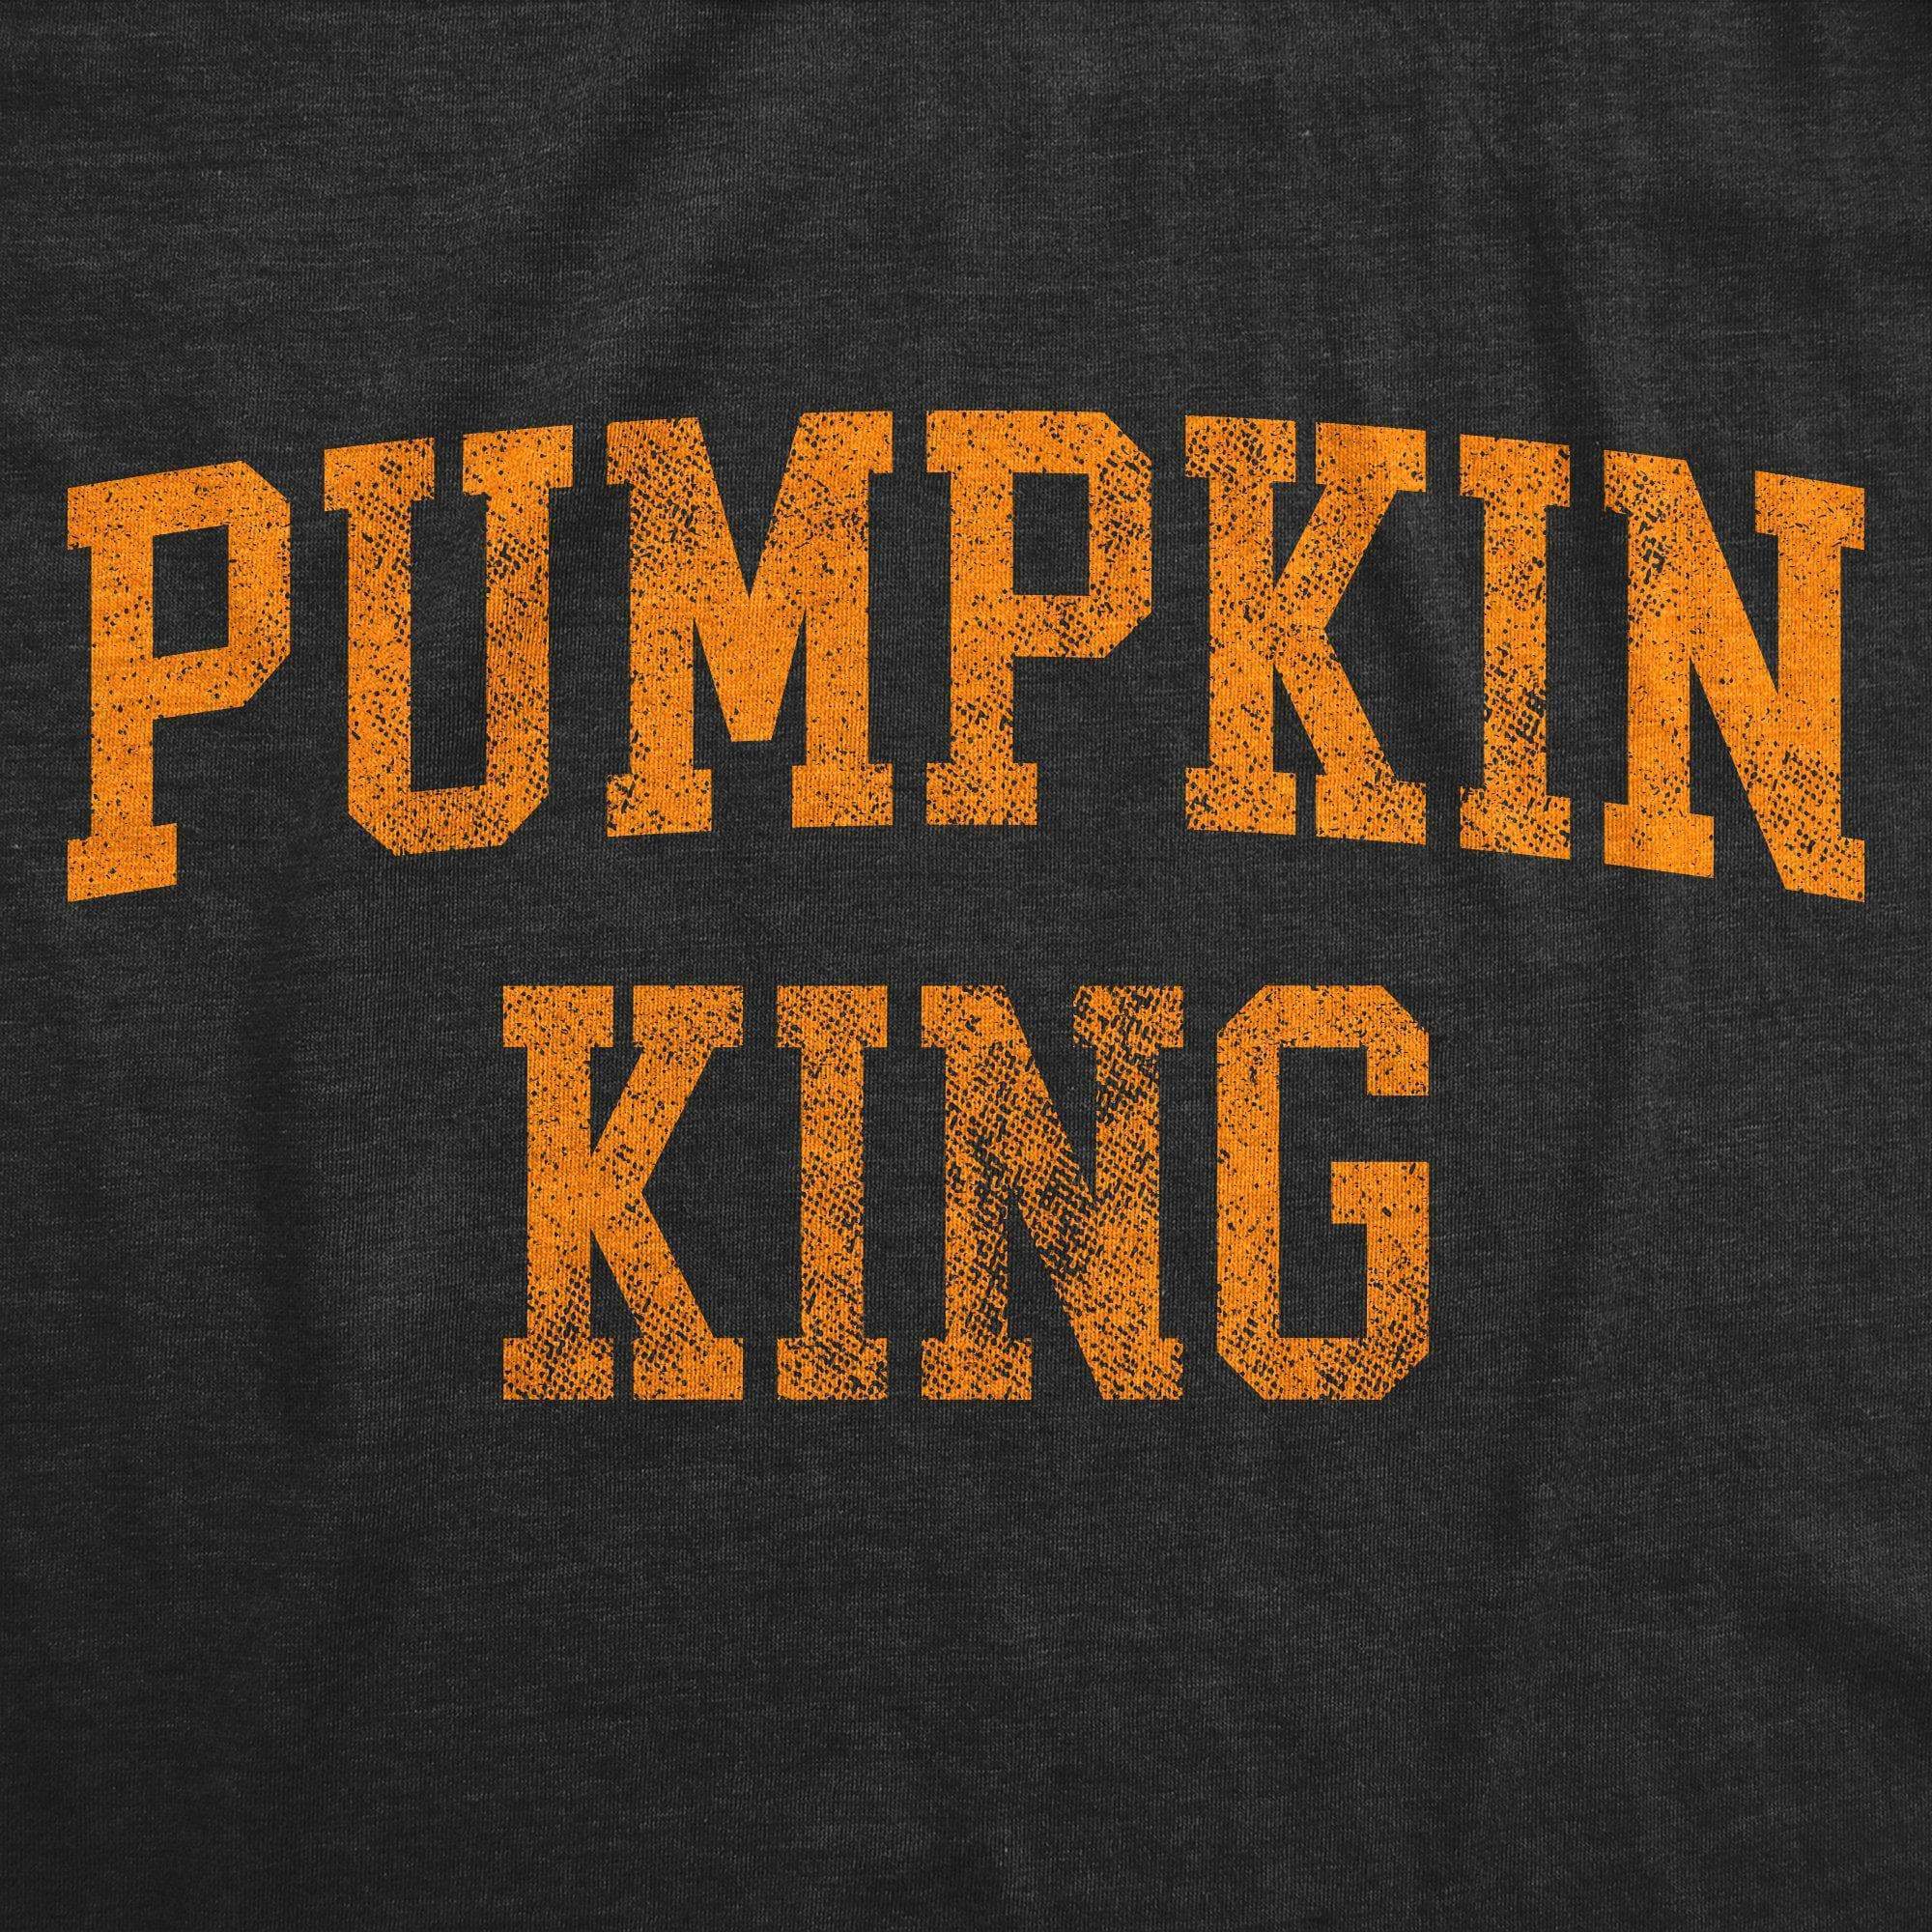 Pumpkin King Men's Tshirt - Crazy Dog T-Shirts